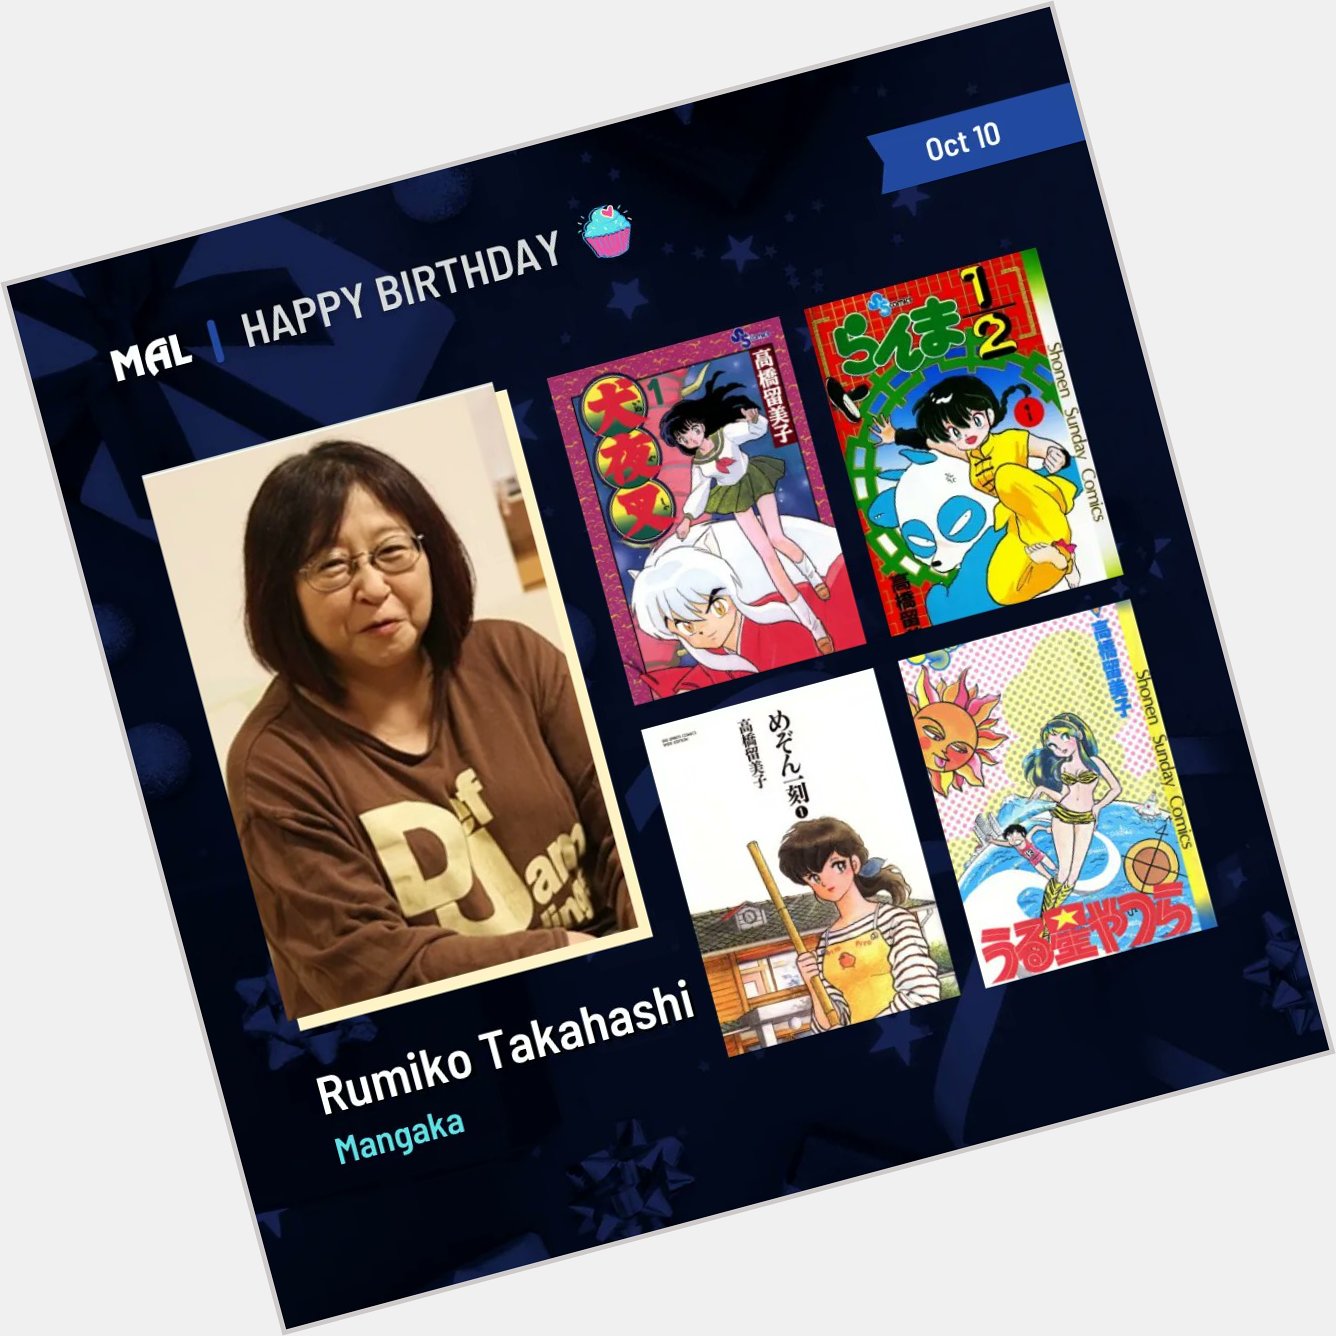 Happy birthday to Rumiko Takahashi! Full profile:  